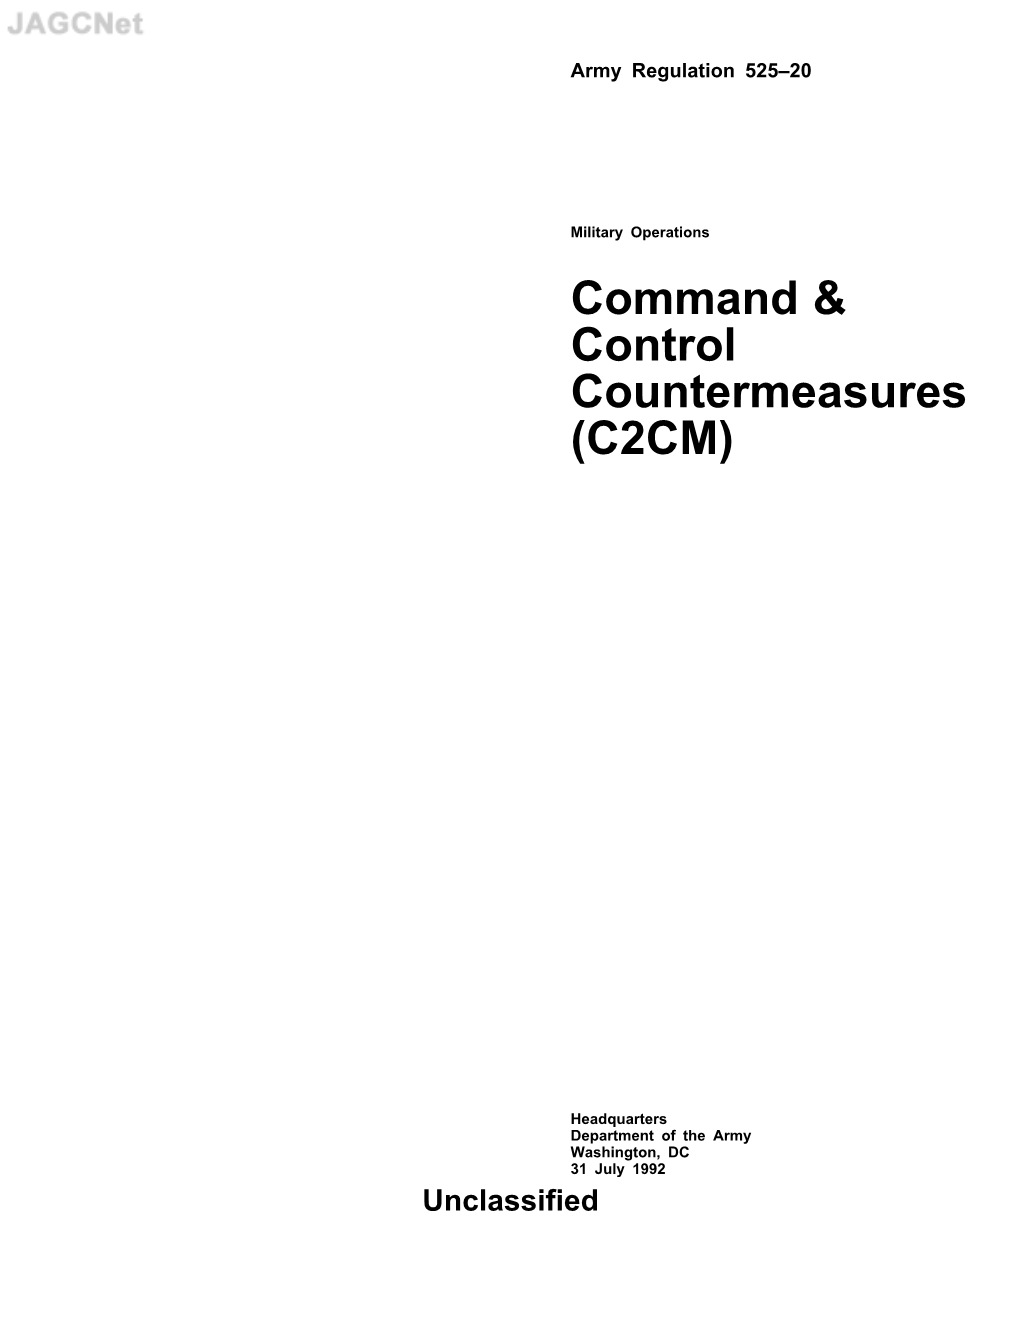 Command & Control Countermeasures (C2CM)